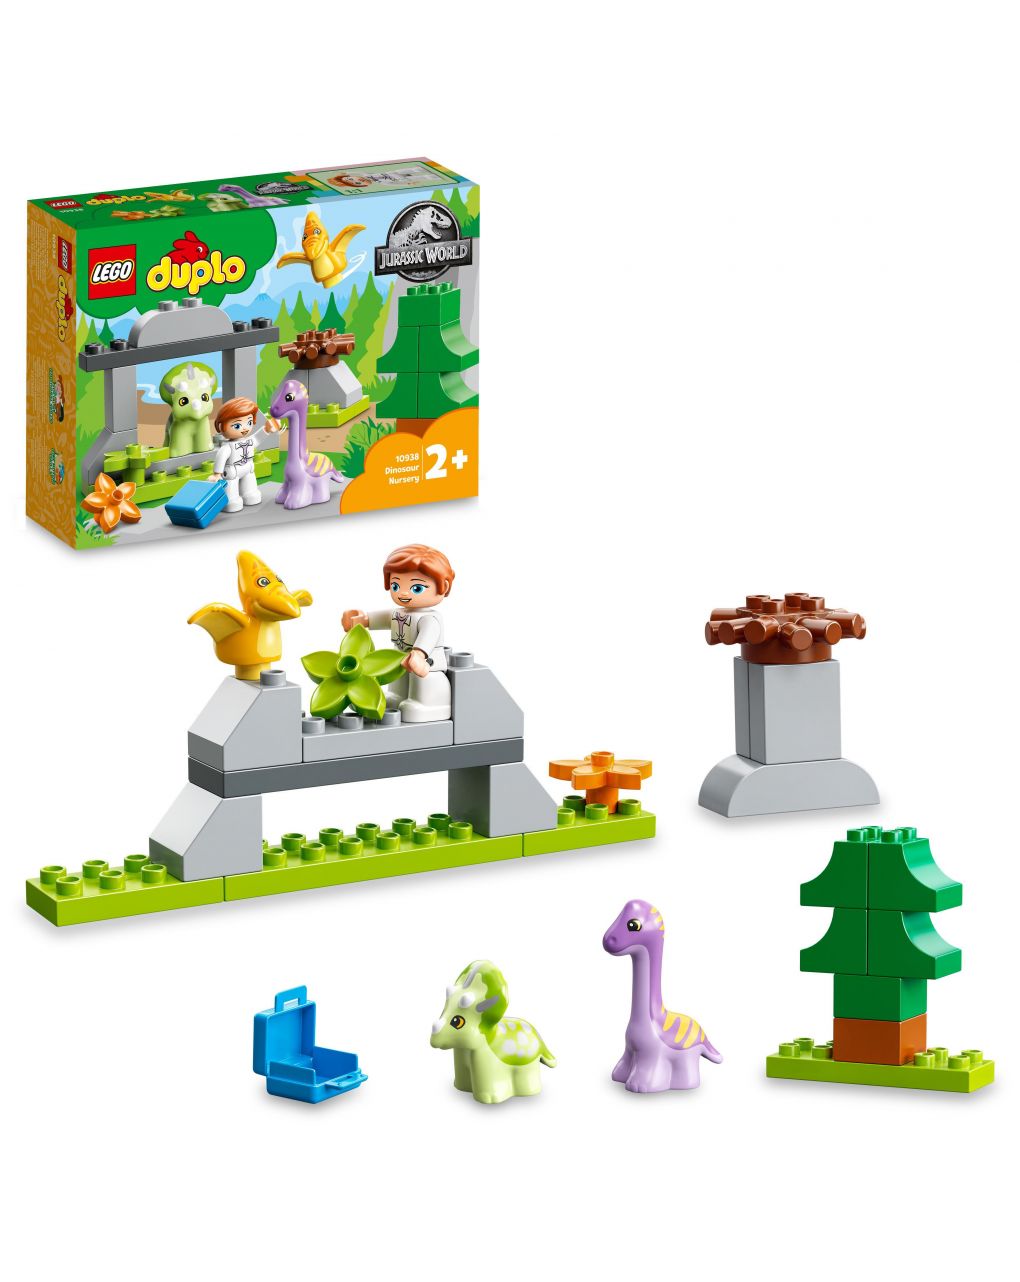 L’asilo nido dei dinosauri 10938 - lego duplo - LEGO Duplo